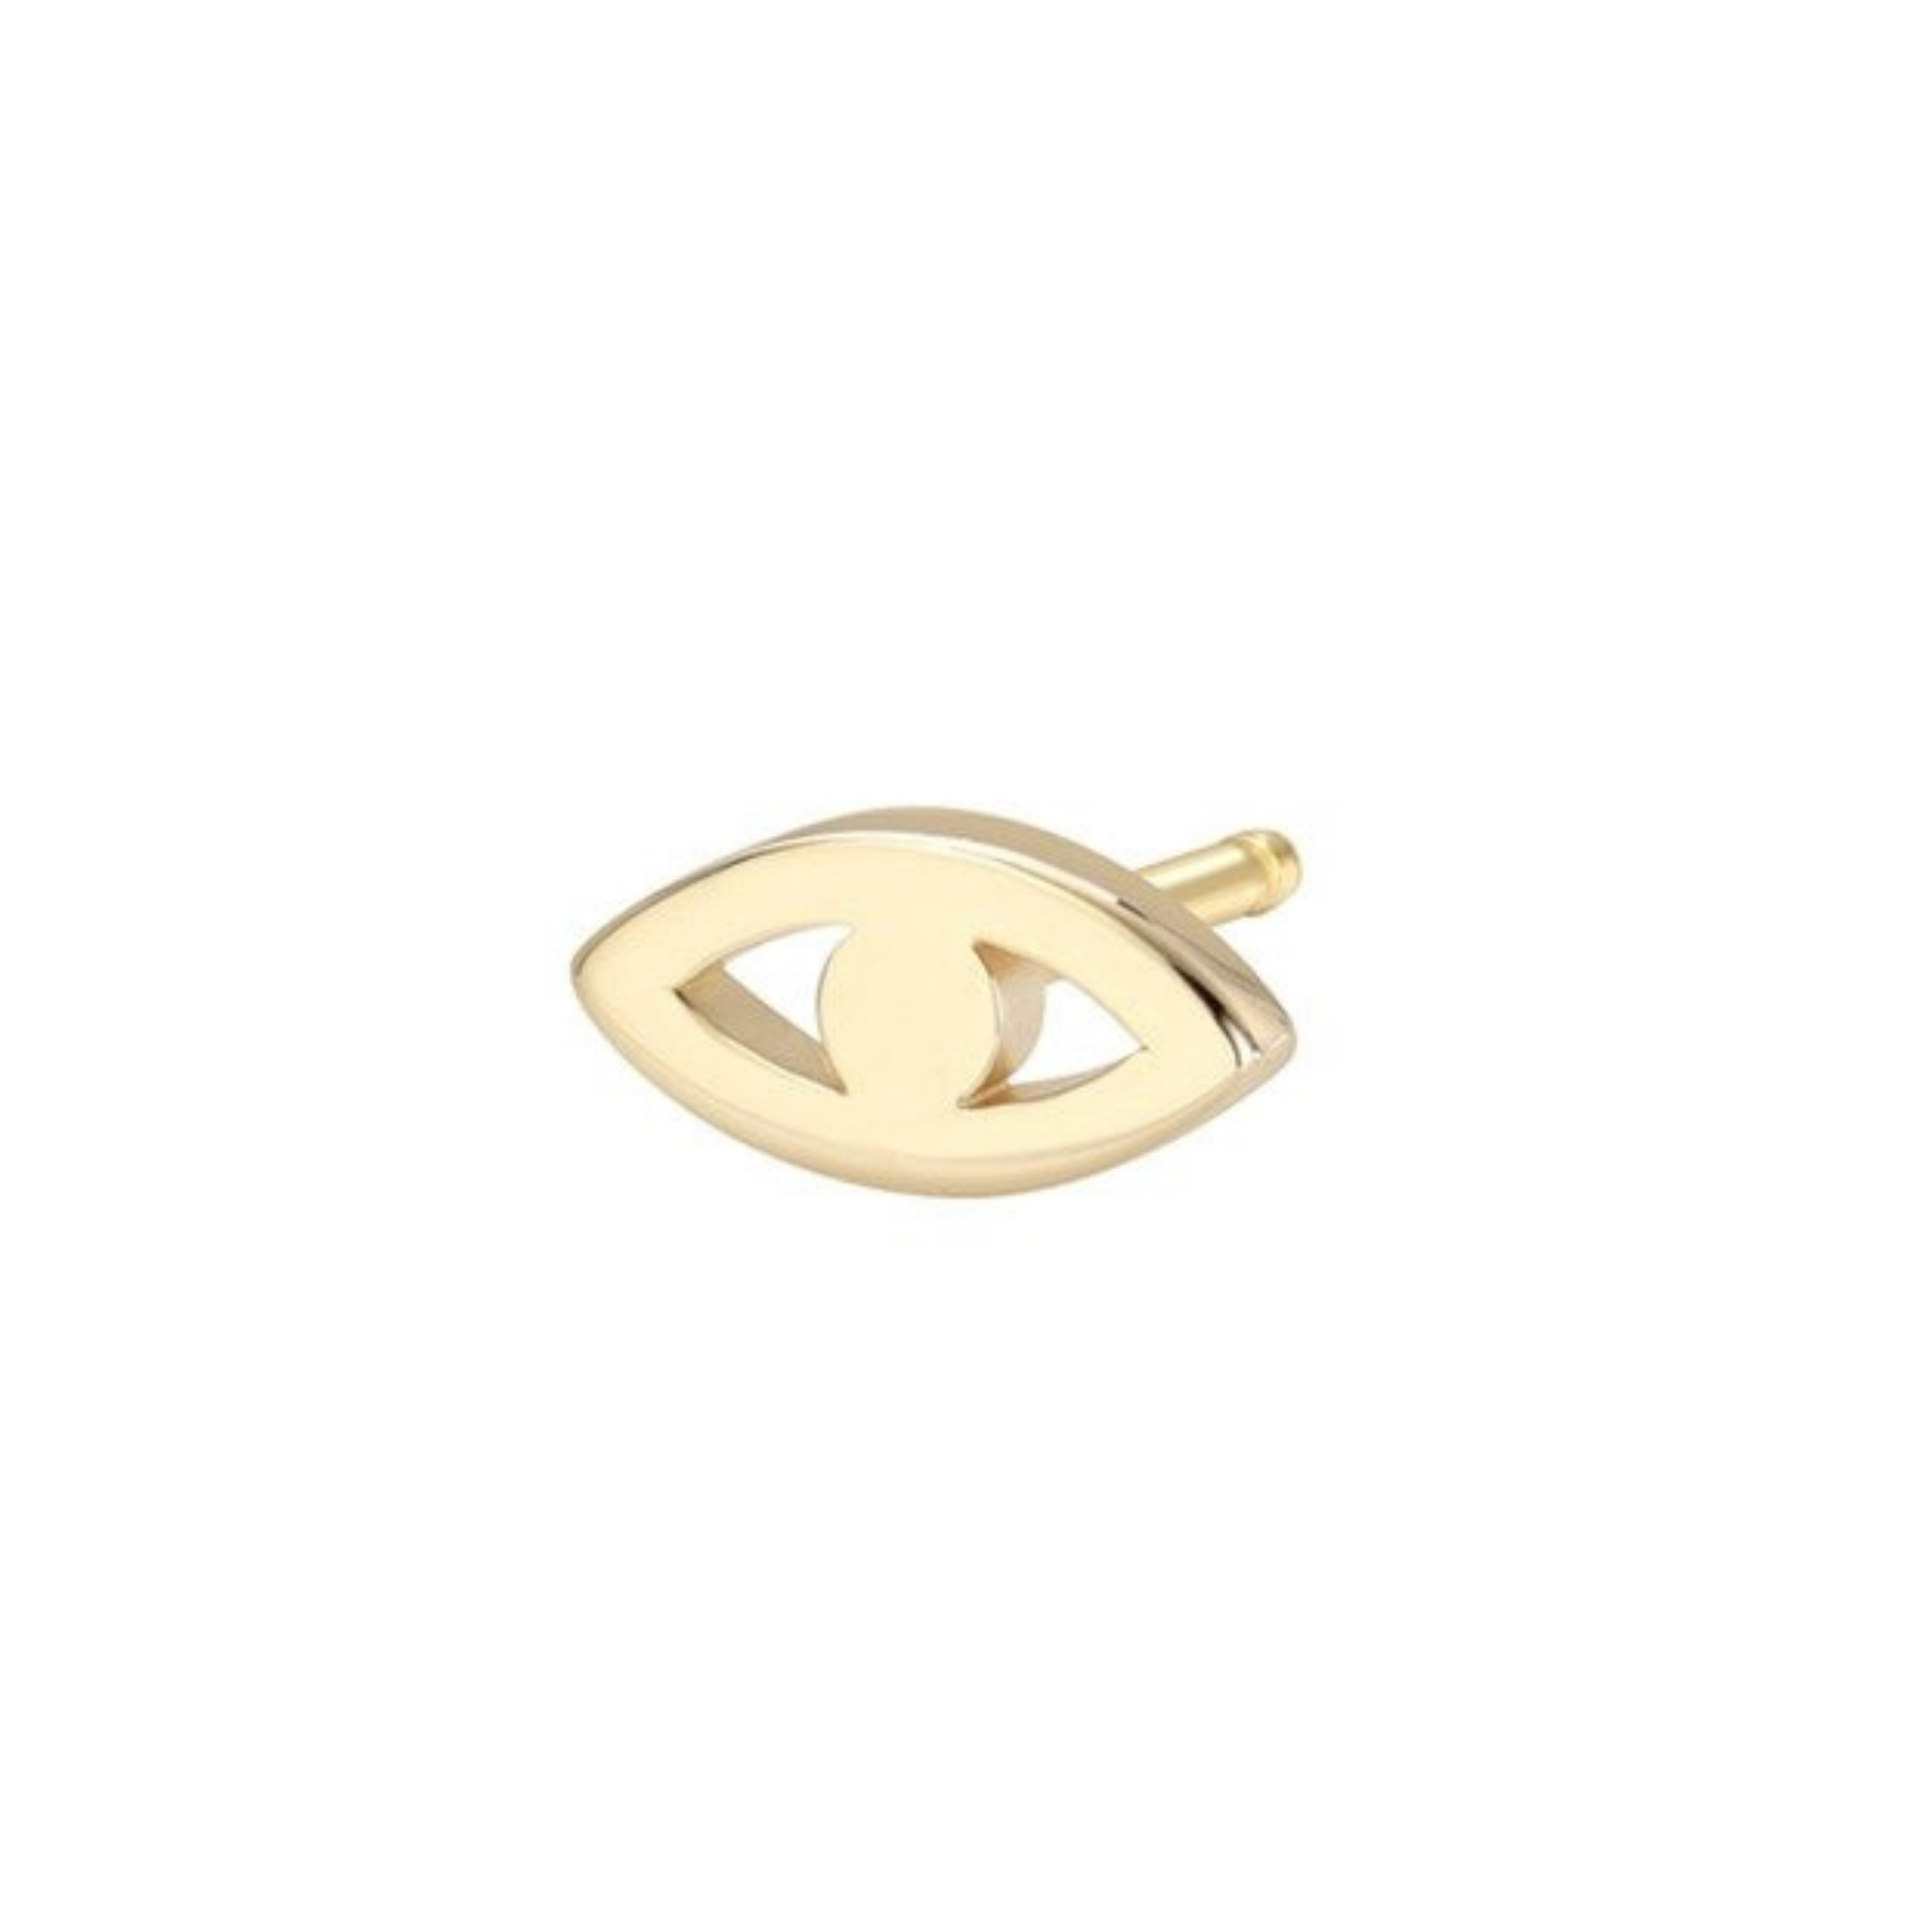  Zoe Lev 14k Gold Tiny Evil Eye Stud Earring, $95